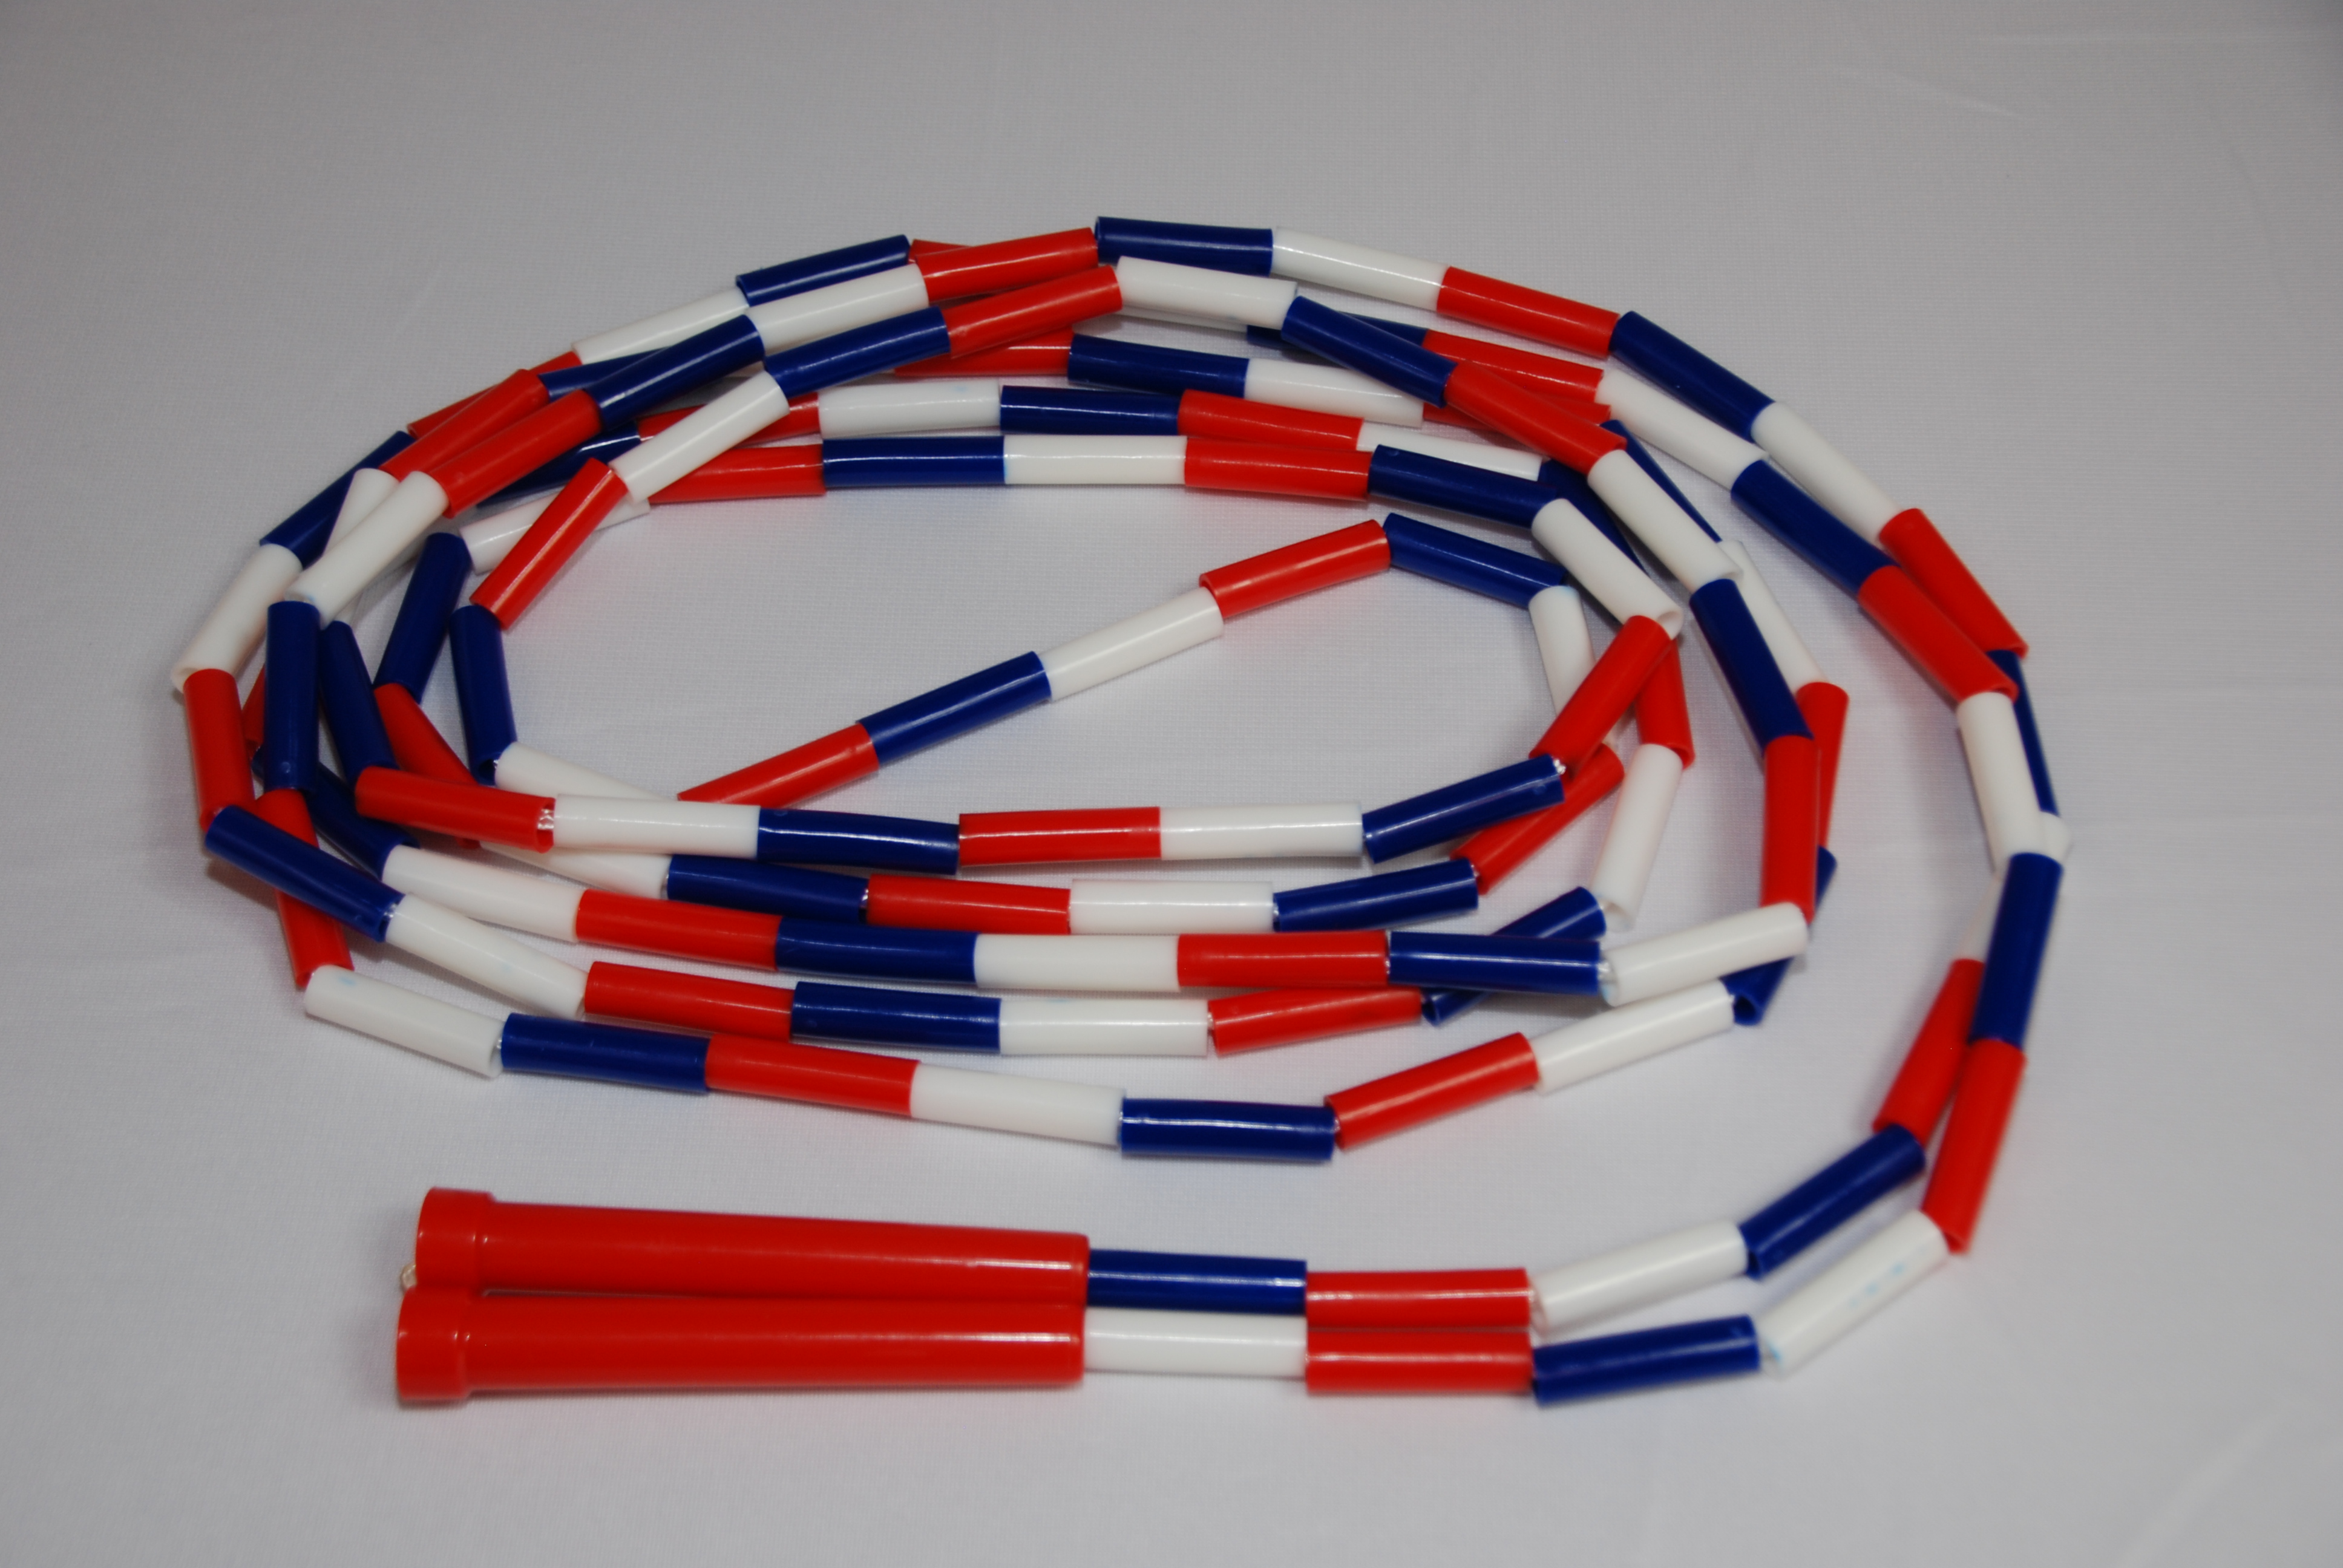 Picture of Everrich EVA-0040 Plastic Segmented Jump Ropes 16 Feet - Set of 6